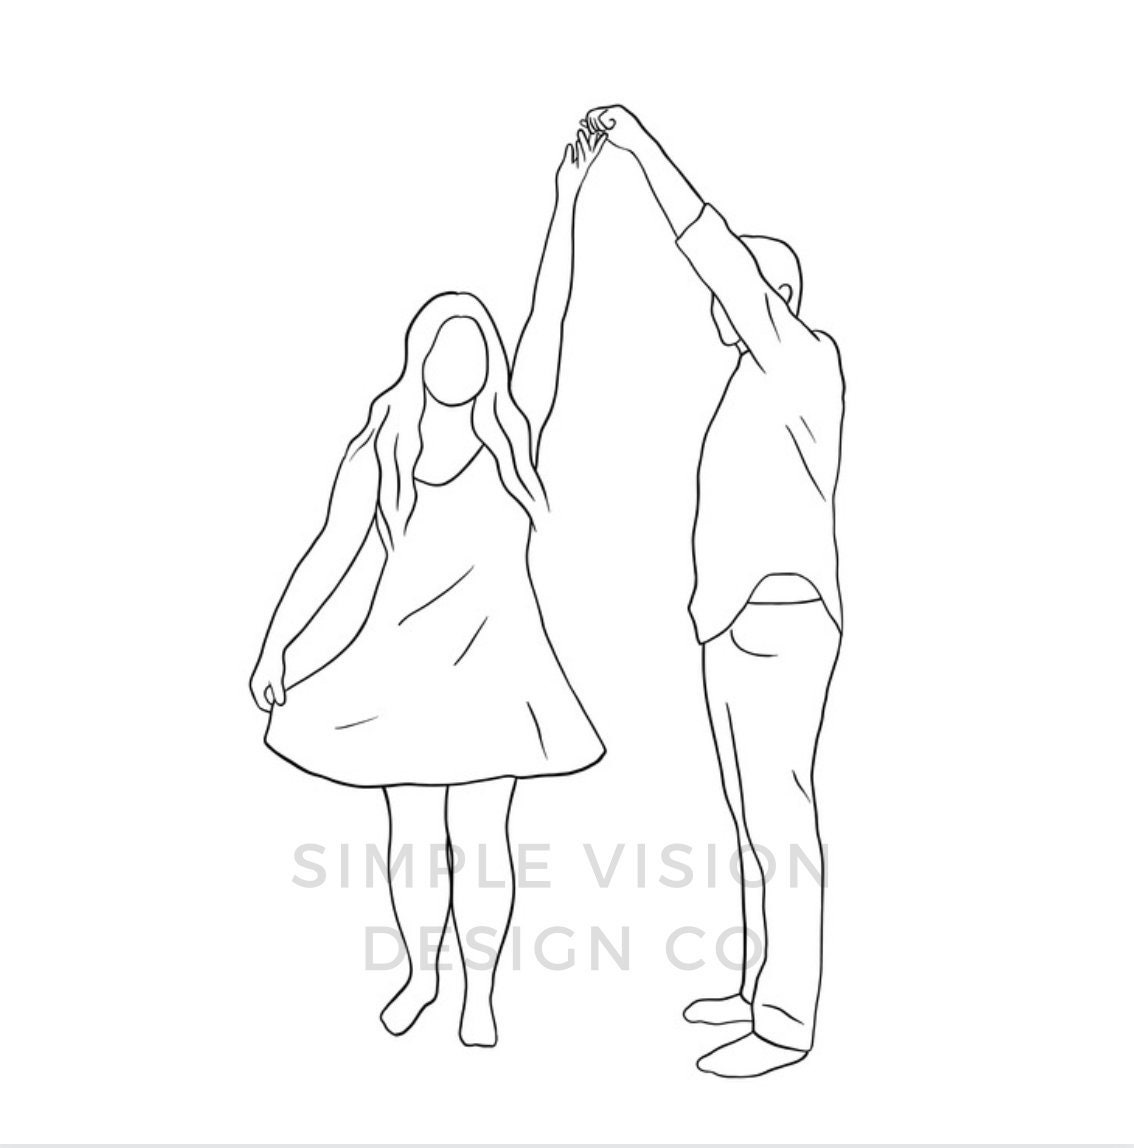 Sweethearts / 50 x 34 cm Drawing  Drawings, Couple dancing drawing,  Dancing drawings